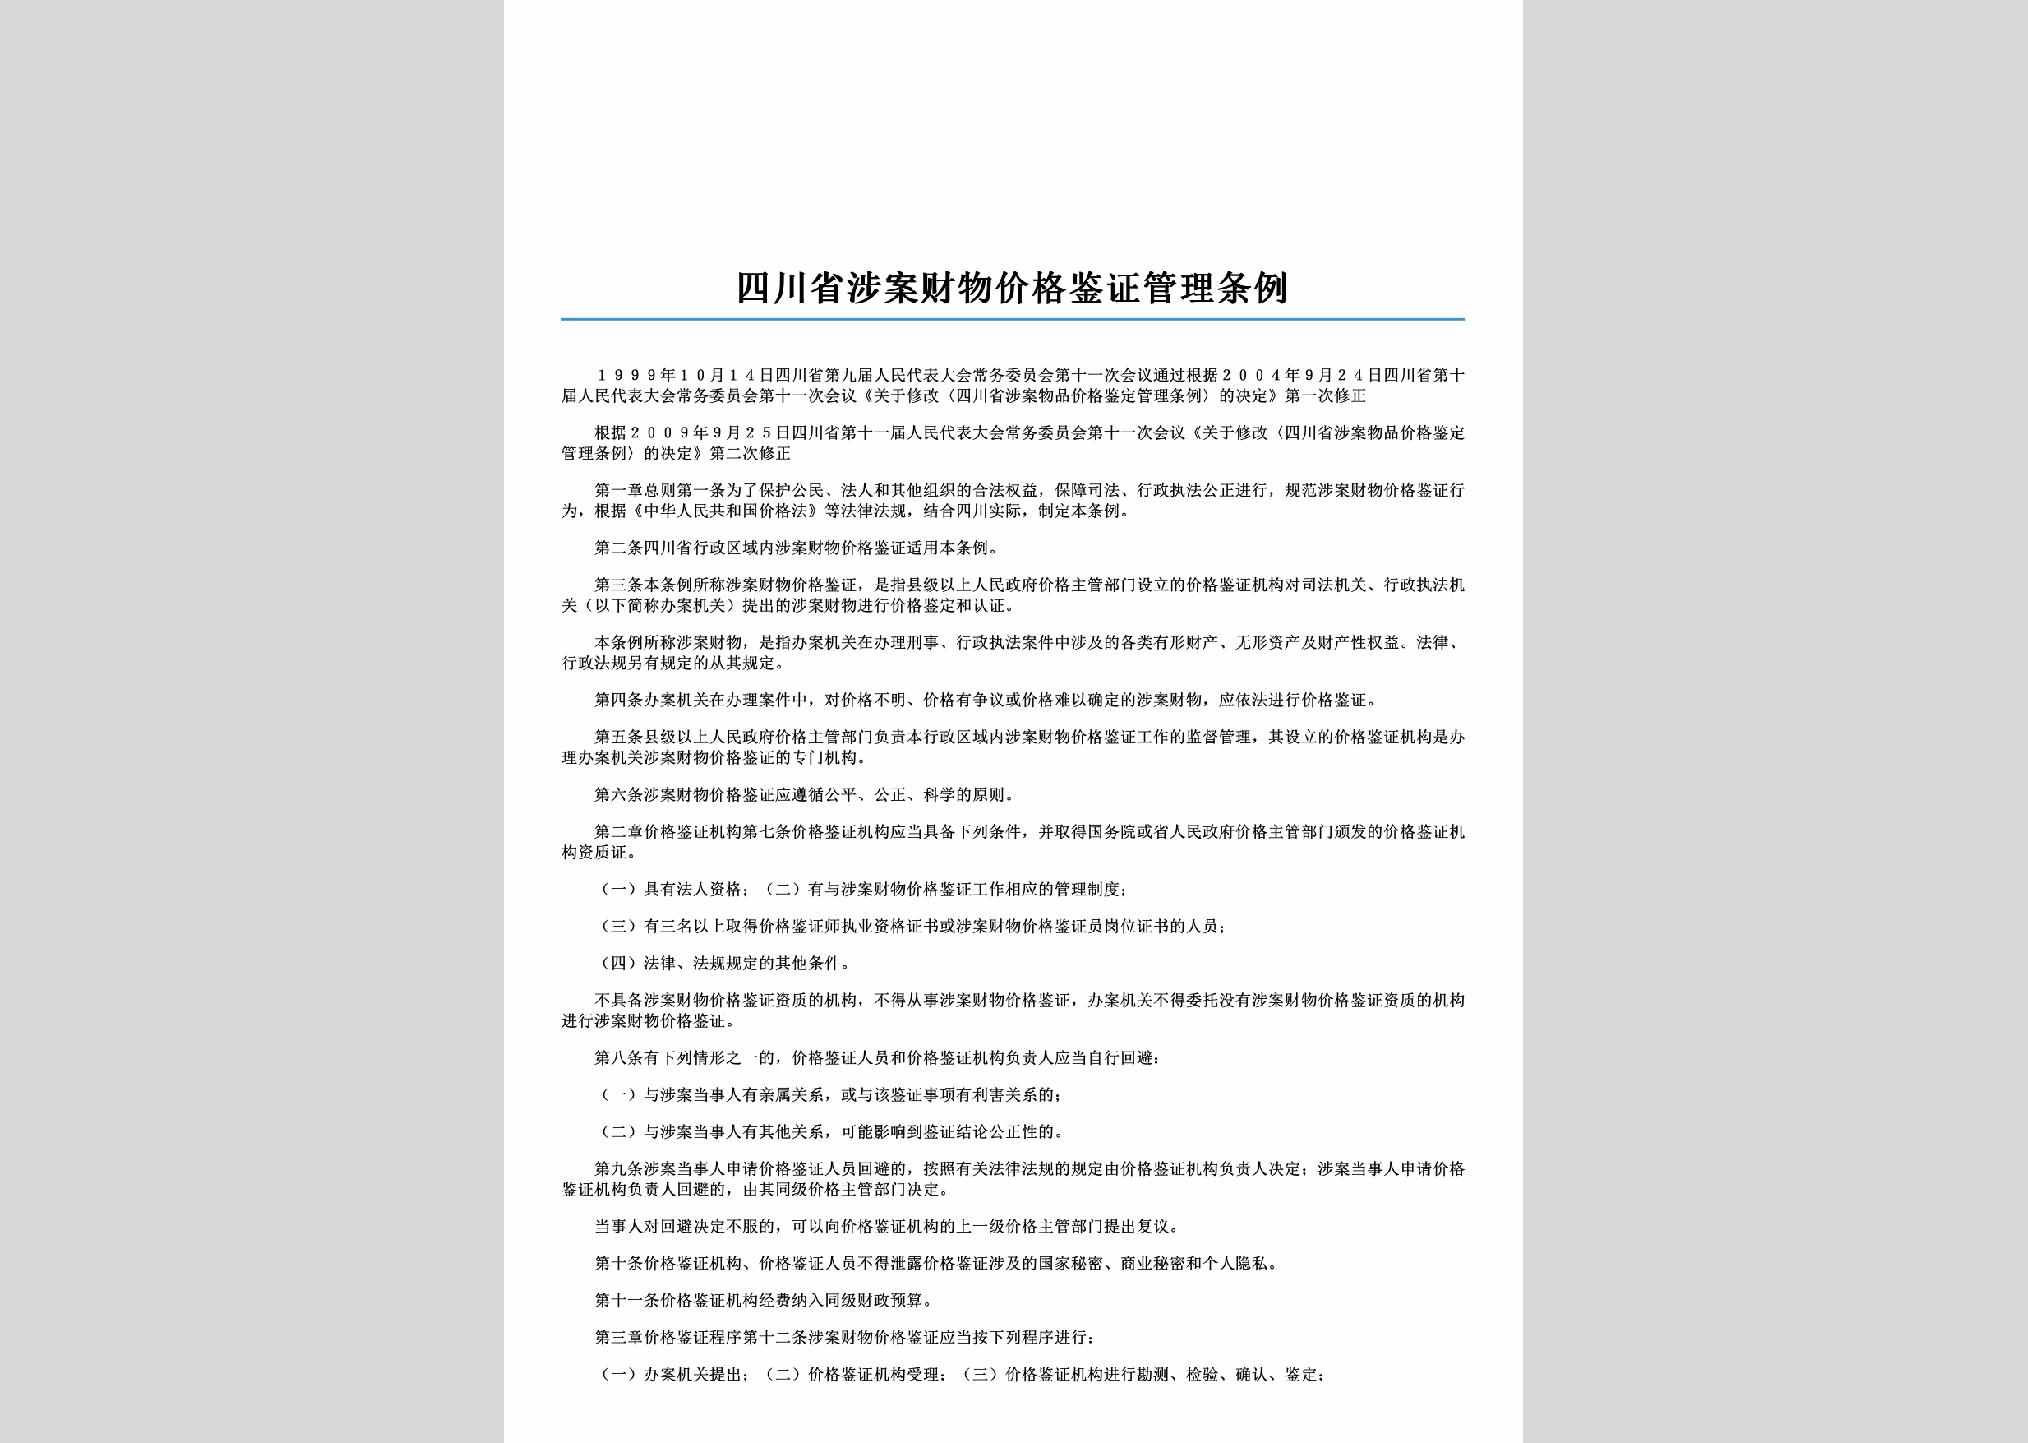 SC-CWJGJZTL-2000：四川省涉案财物价格鉴证管理条例